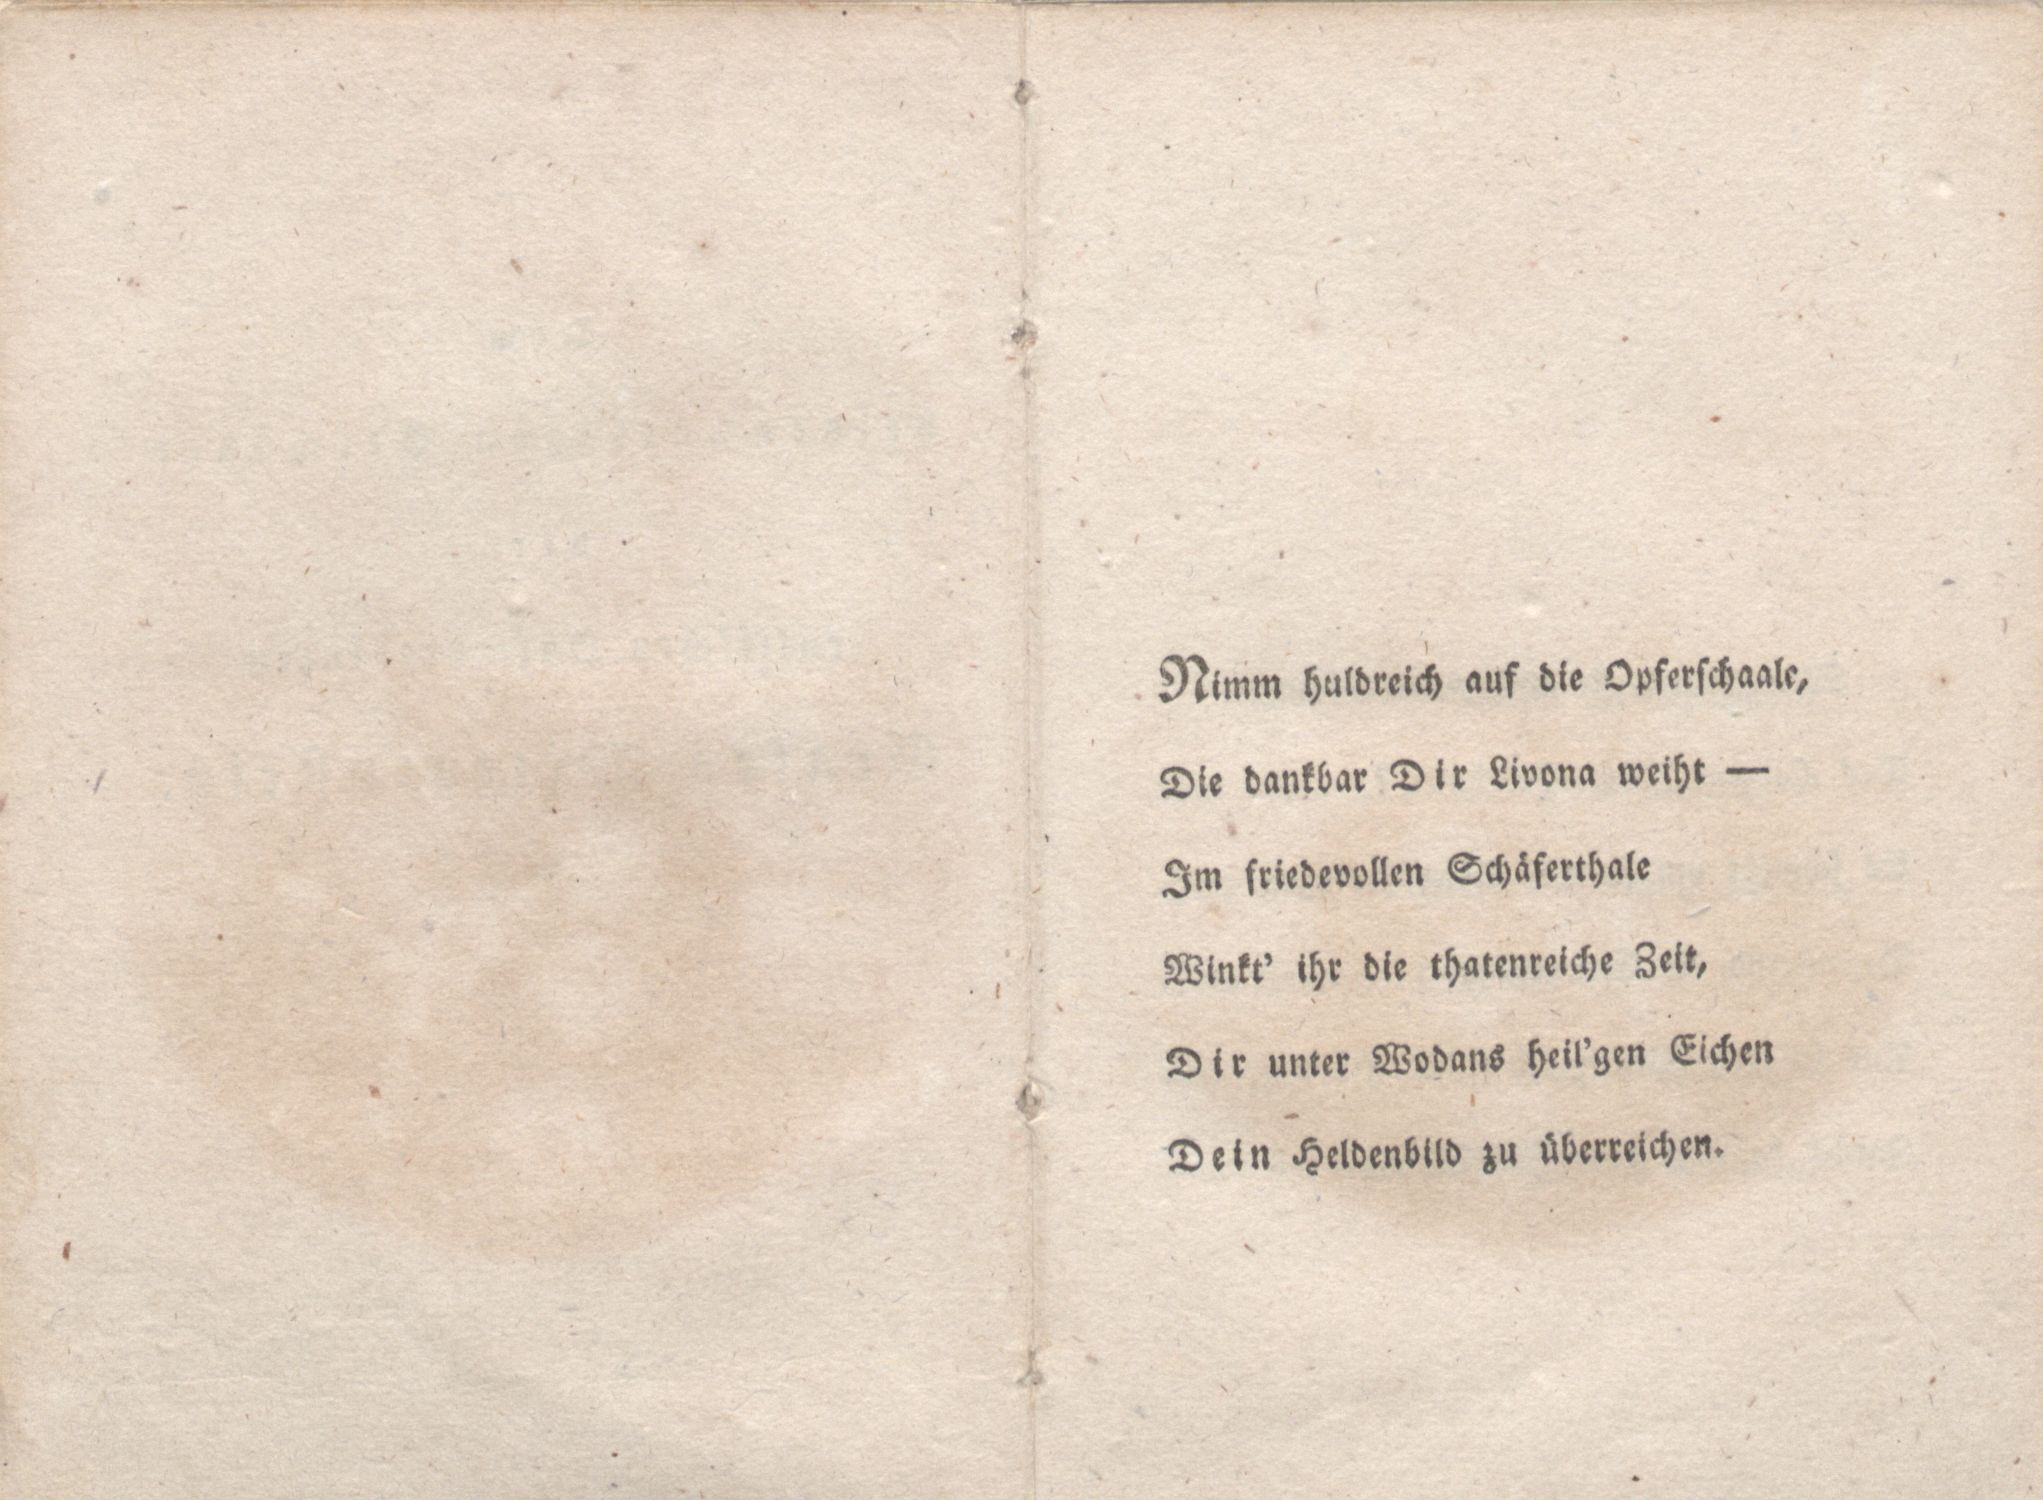 Livona [2] (1815) | 4. (I) Pühendus